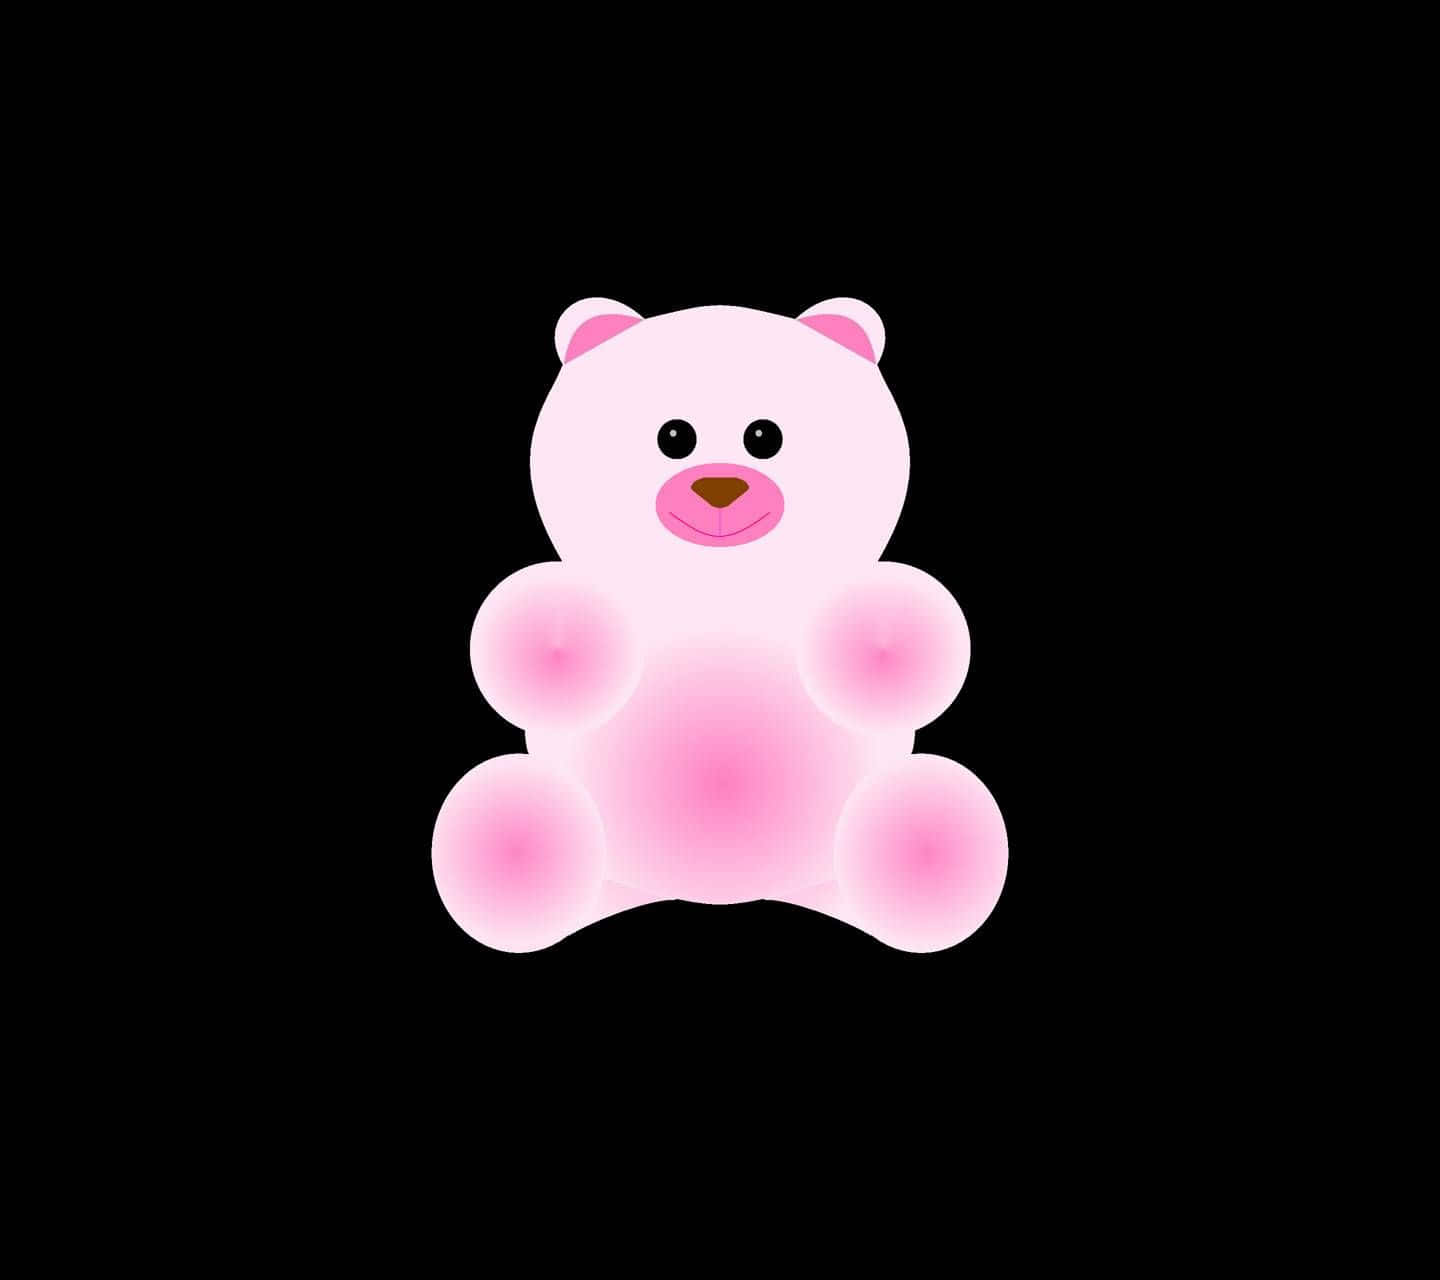 Cute Chubby Pink Teddy Bear Background